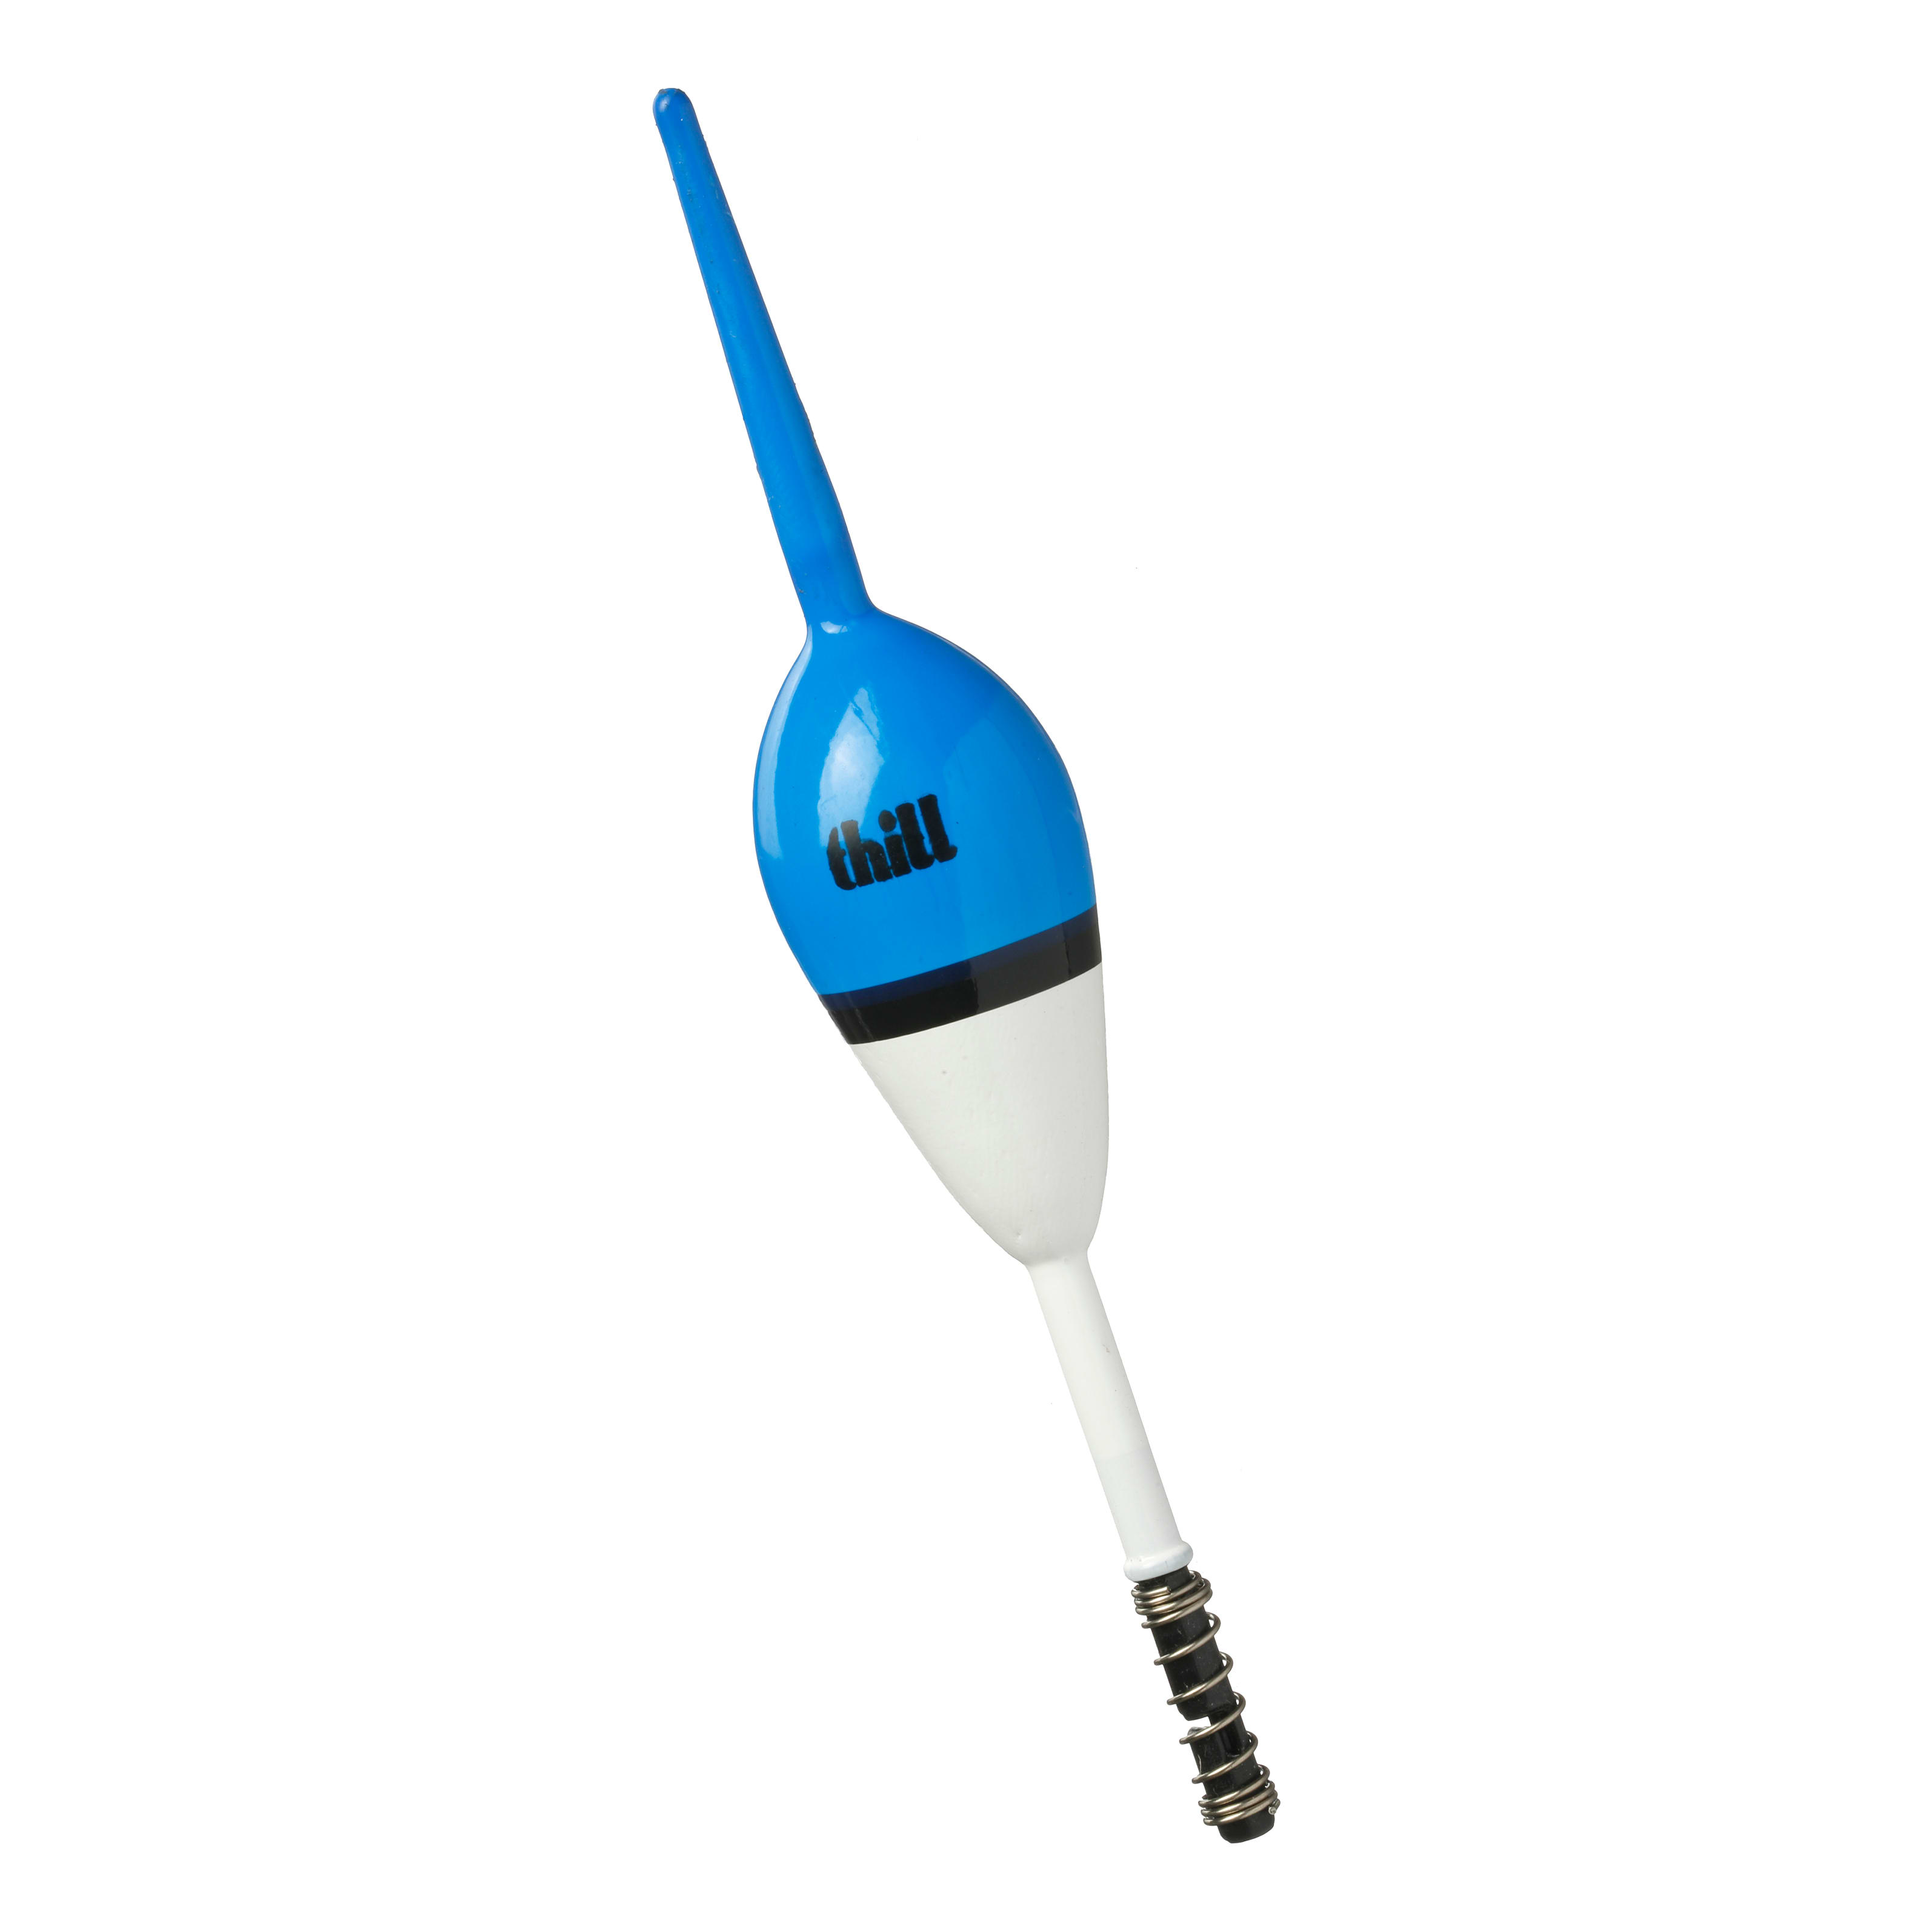 Thill Bubb'l Gum Spring Bobber UMC488 - medium tearfrop / Blue